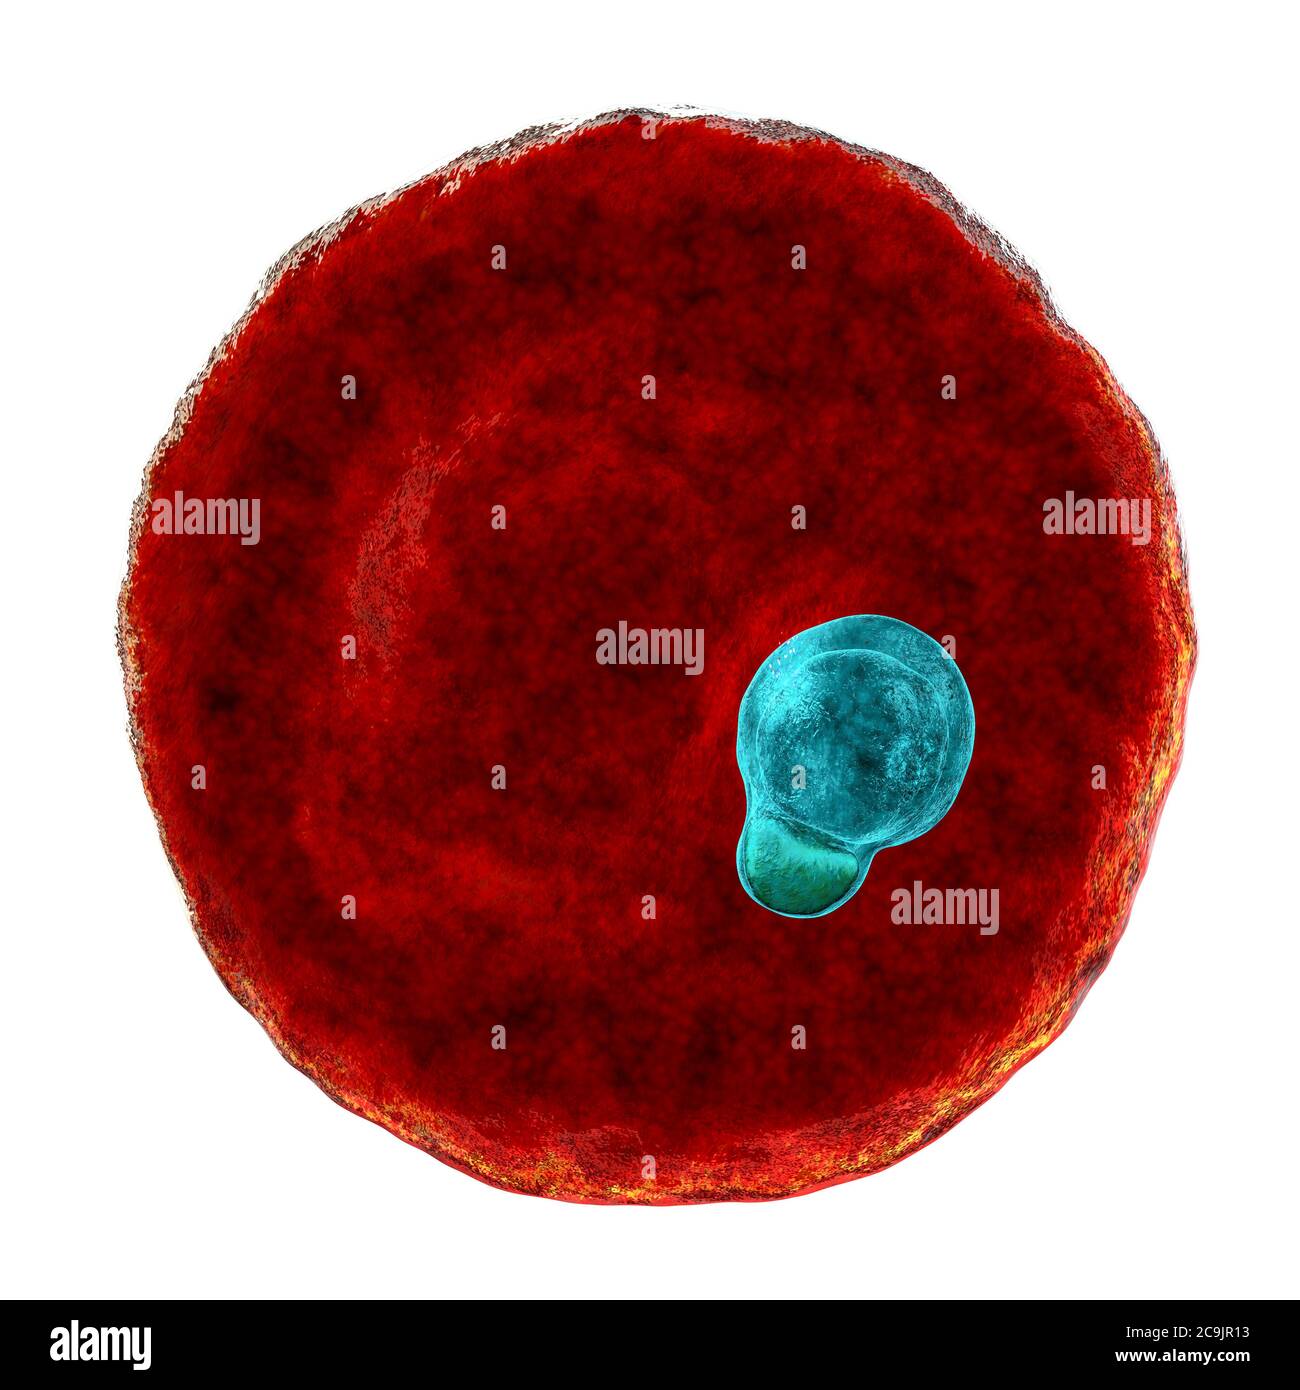 Plasmodium malariae protozoan innerhalb der roten Blutkörperchen, Computer-Illustration. P. malariae ist der Erreger der Quaranmalaria, auch Malar genannt Stockfoto